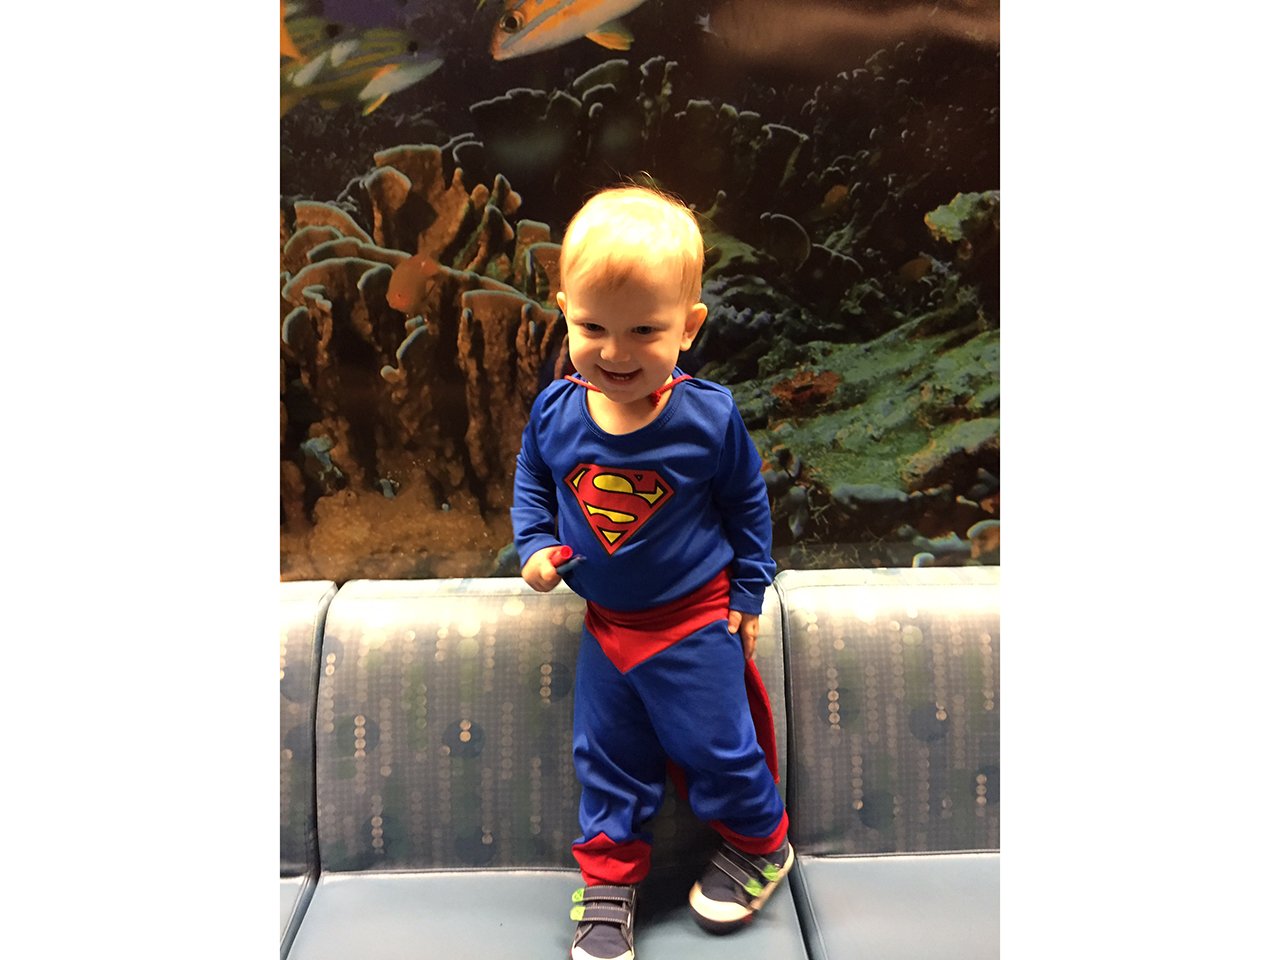 Smiling little boy wearing a superman costume